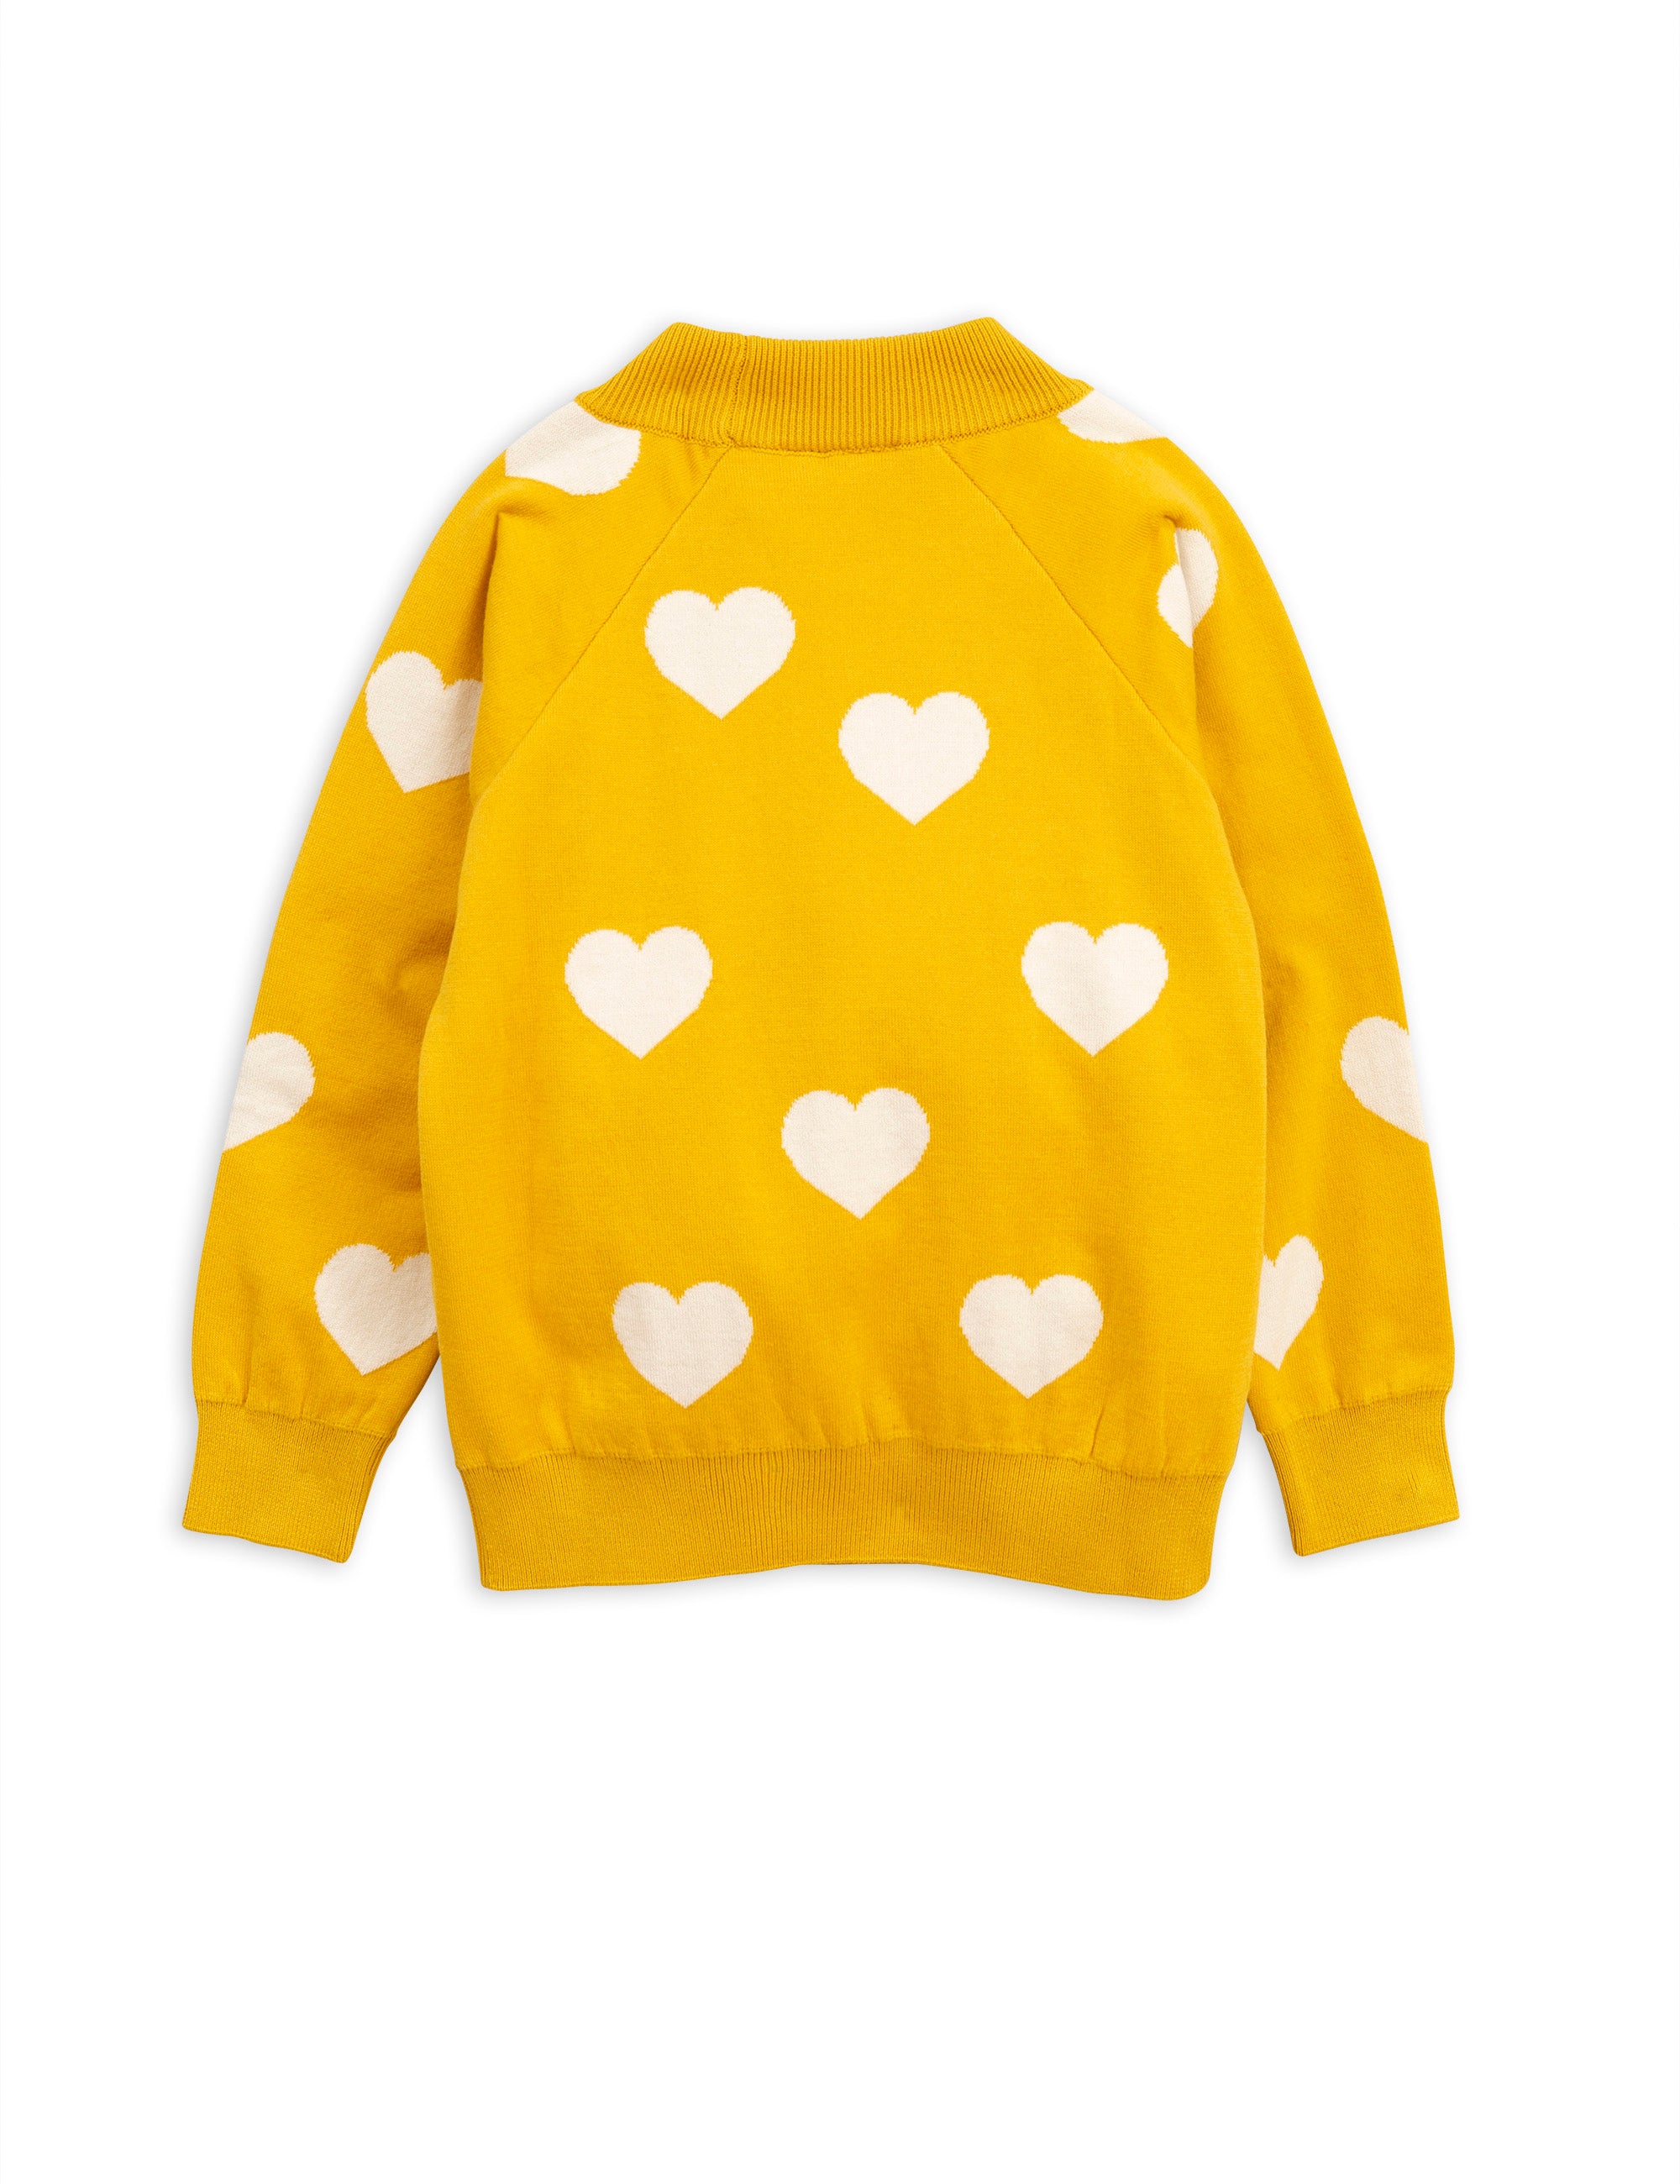 Girls Yellow Heart Cotton Sweater